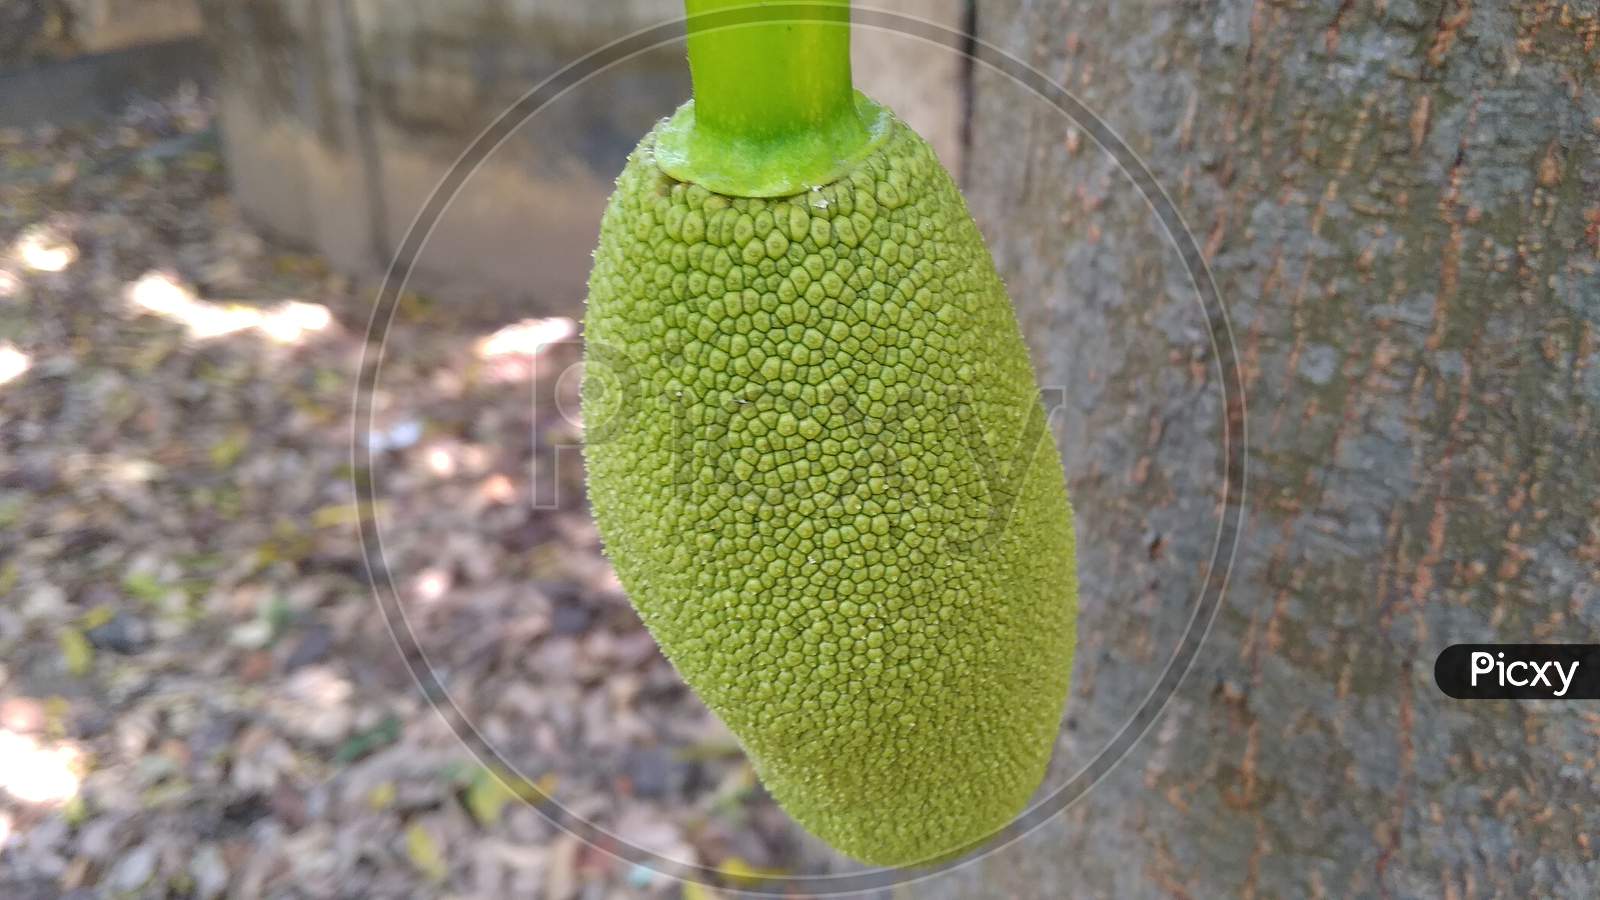 Green beautifull jackfruit in selective focus with blur background